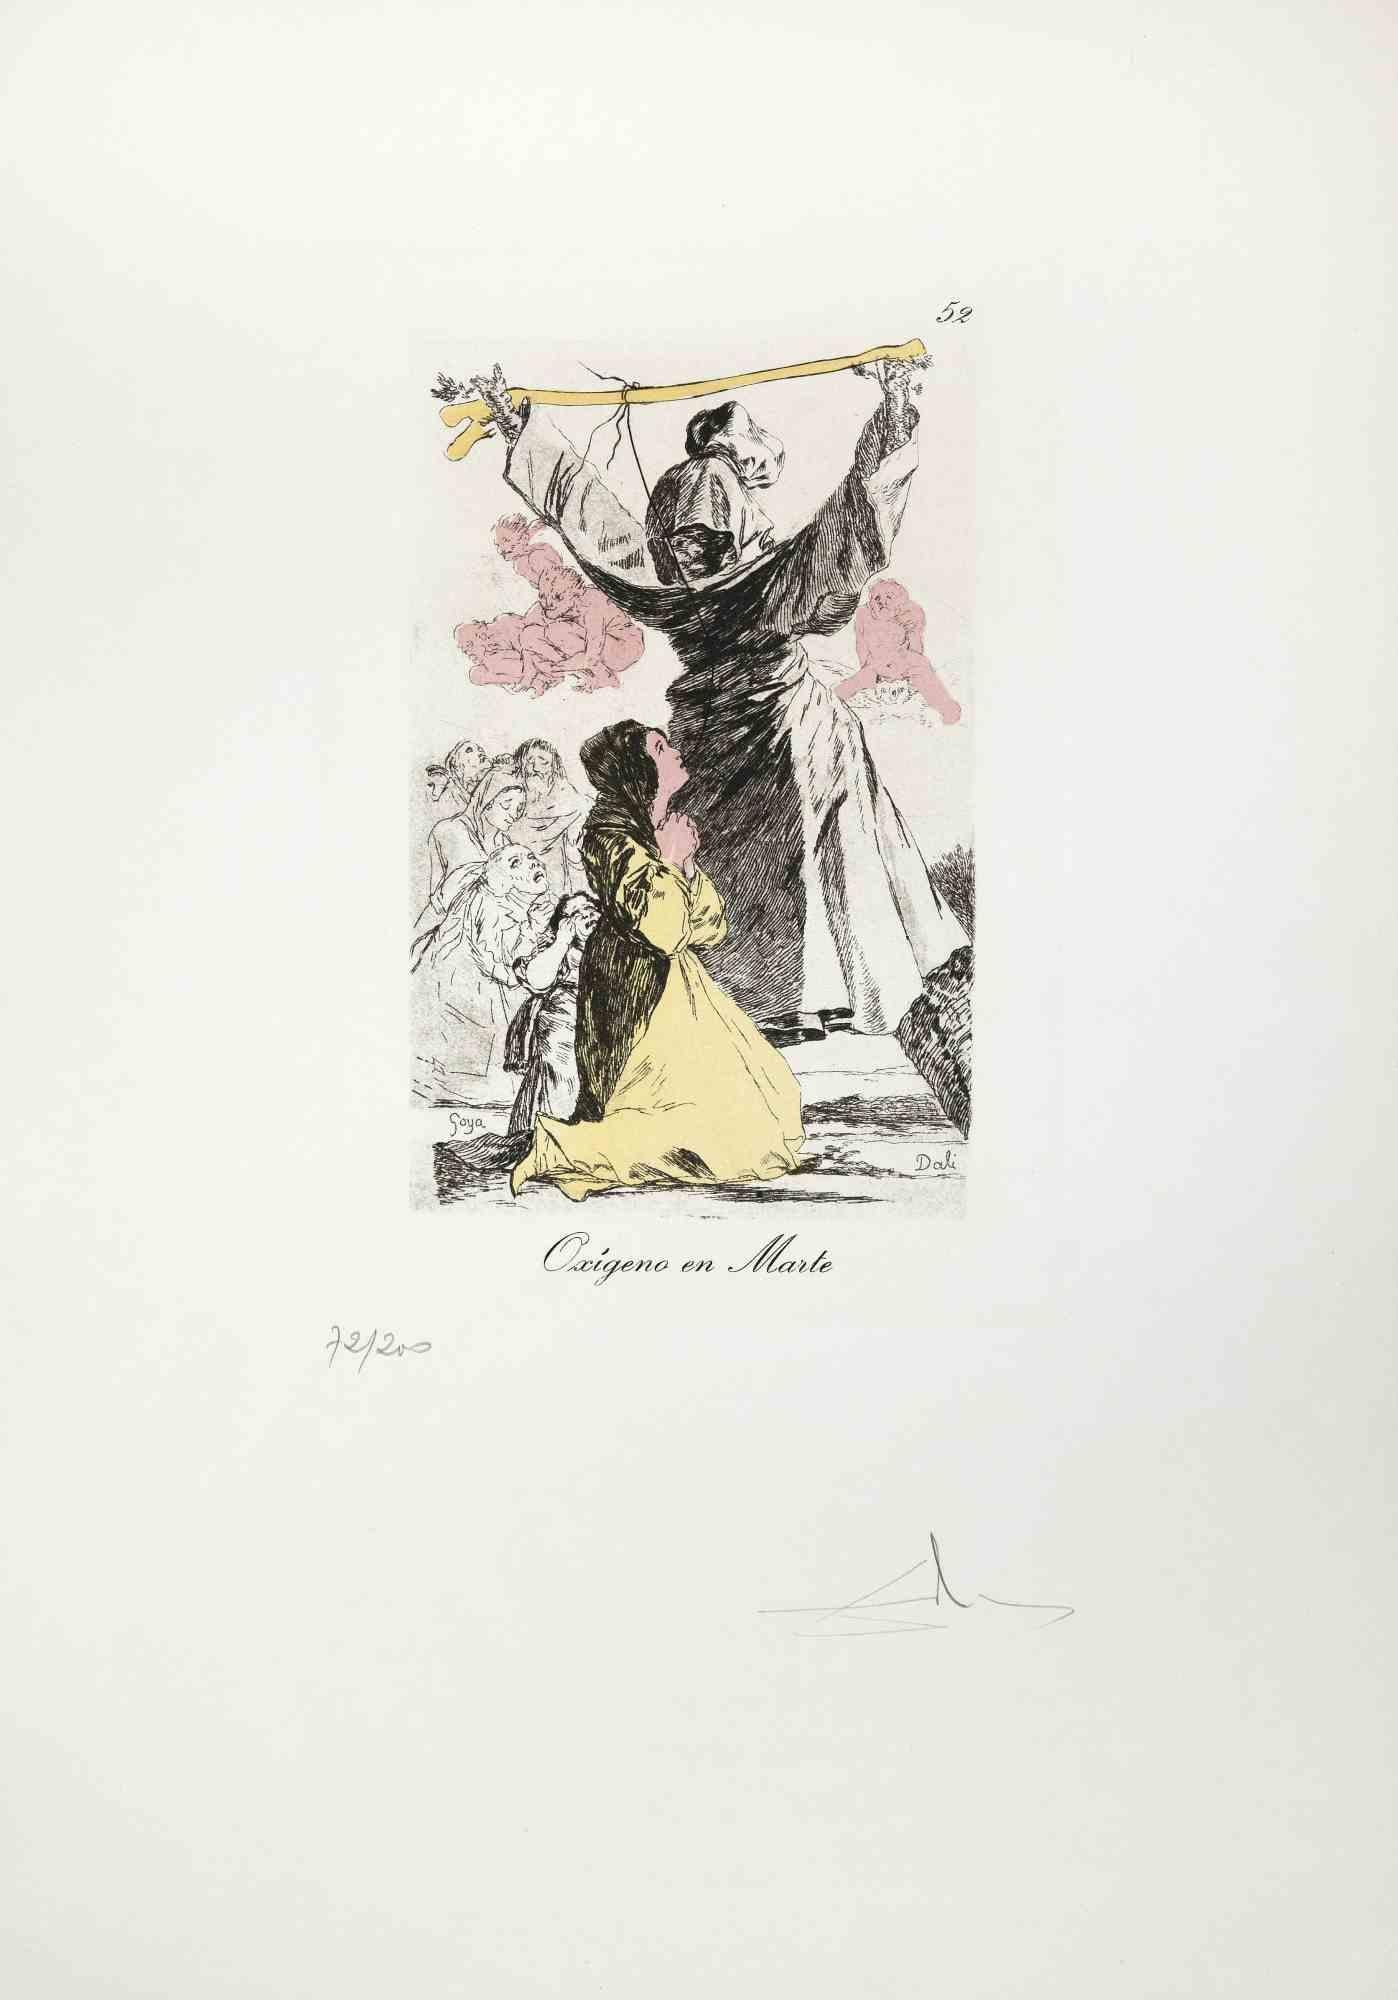 Salvador Dalí Figurative Print - Oxygeno en Marte - Heliogravure attr. to Salvador Dalì - 1970s